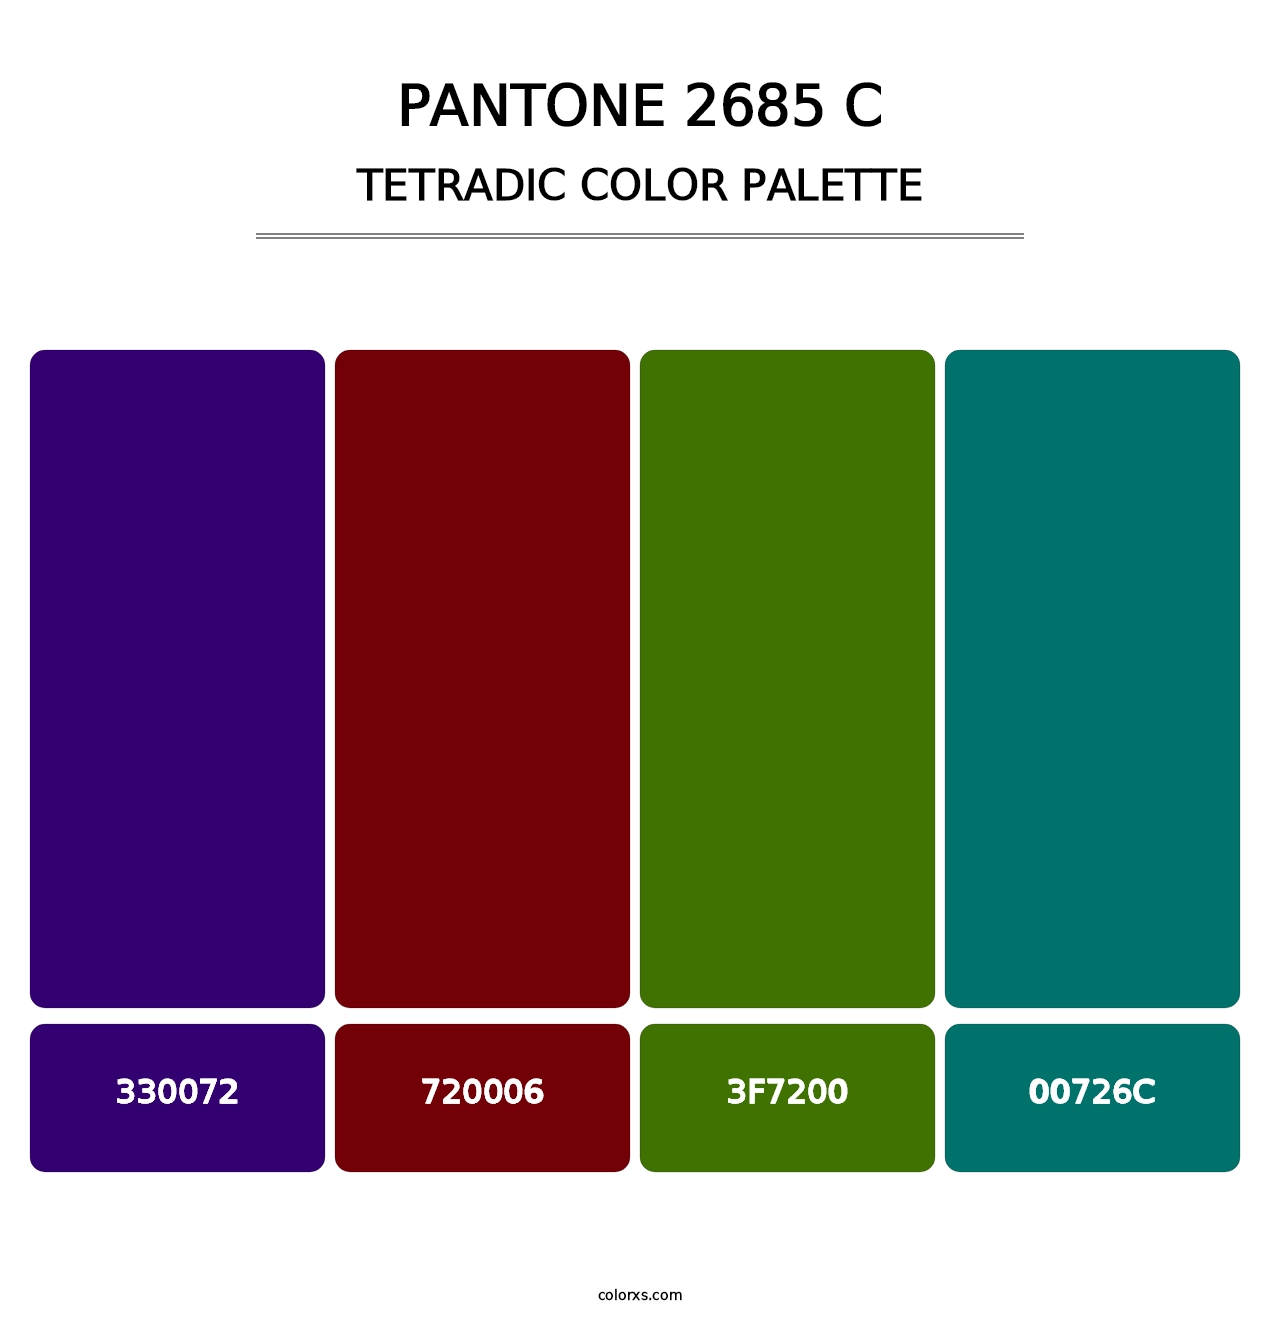 PANTONE 2685 C - Tetradic Color Palette